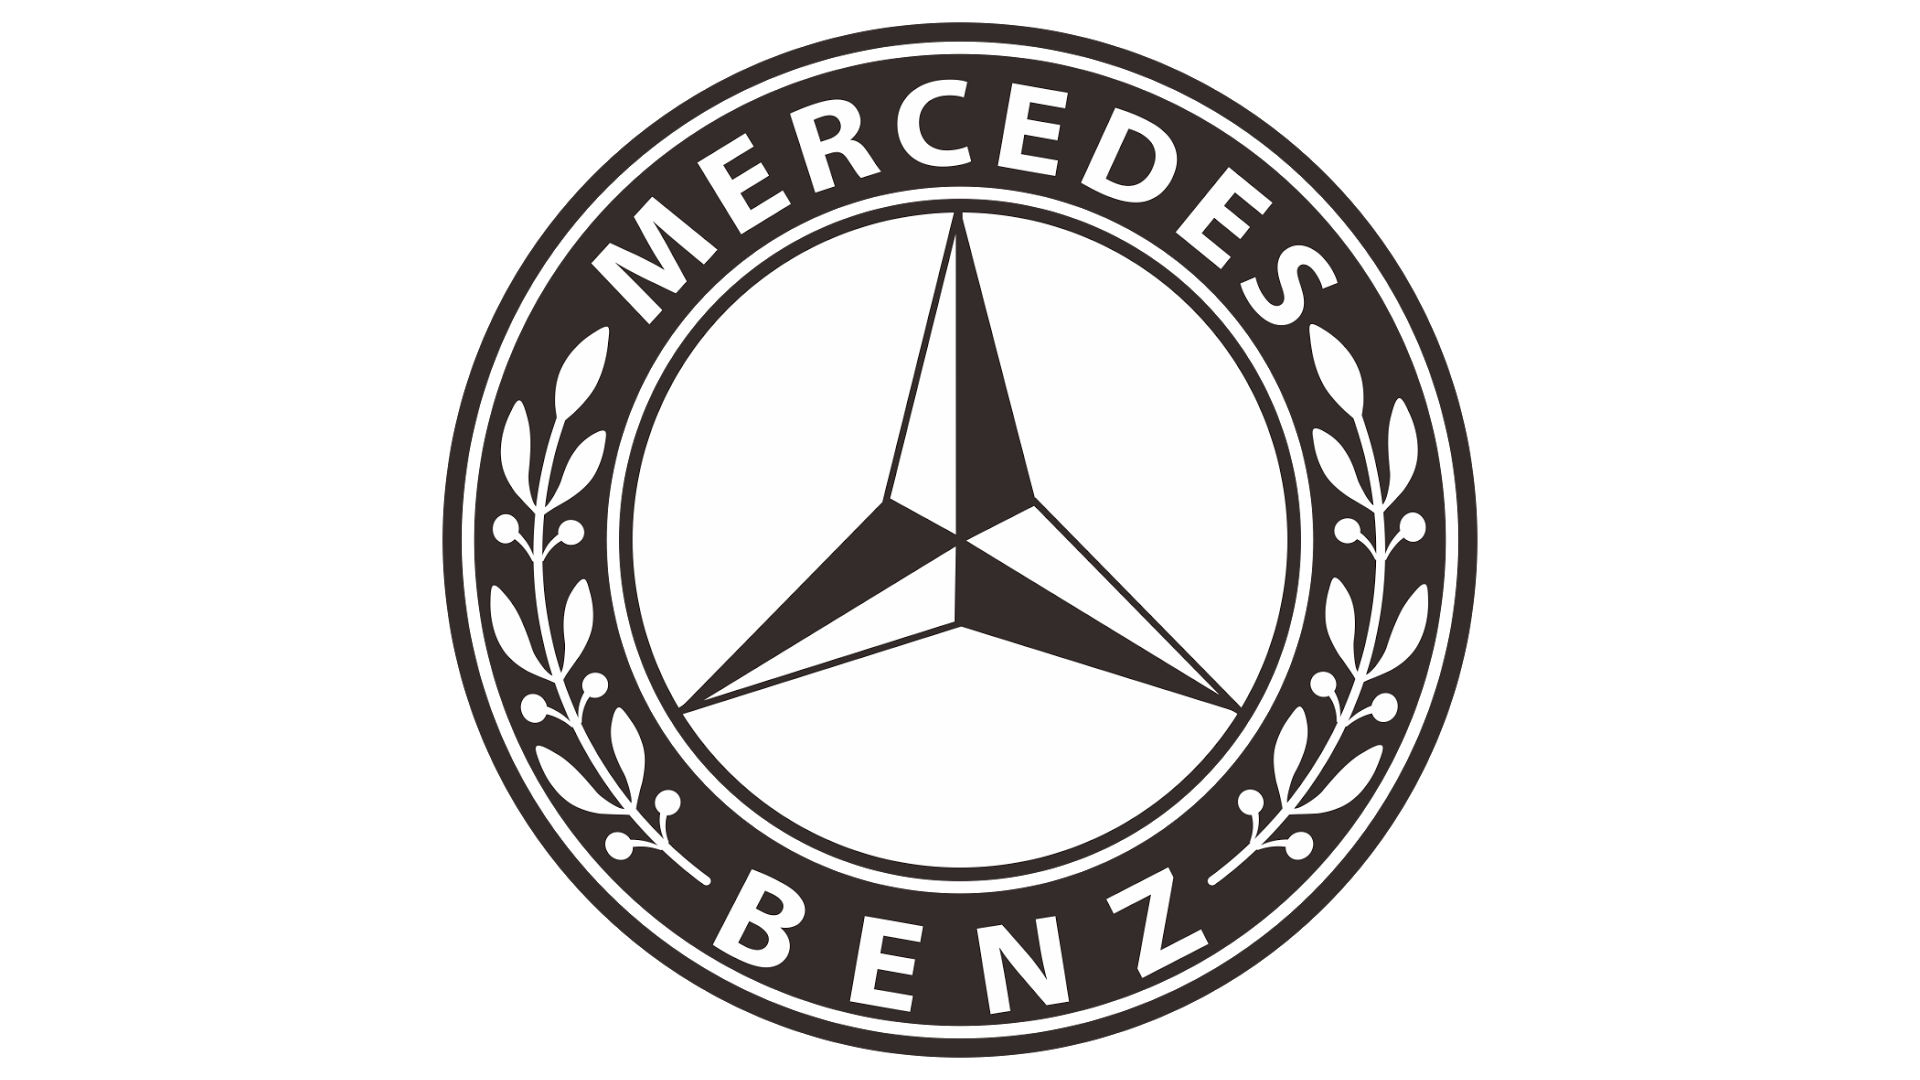 Mercedes benz logo brand symbol with name black Vector Image